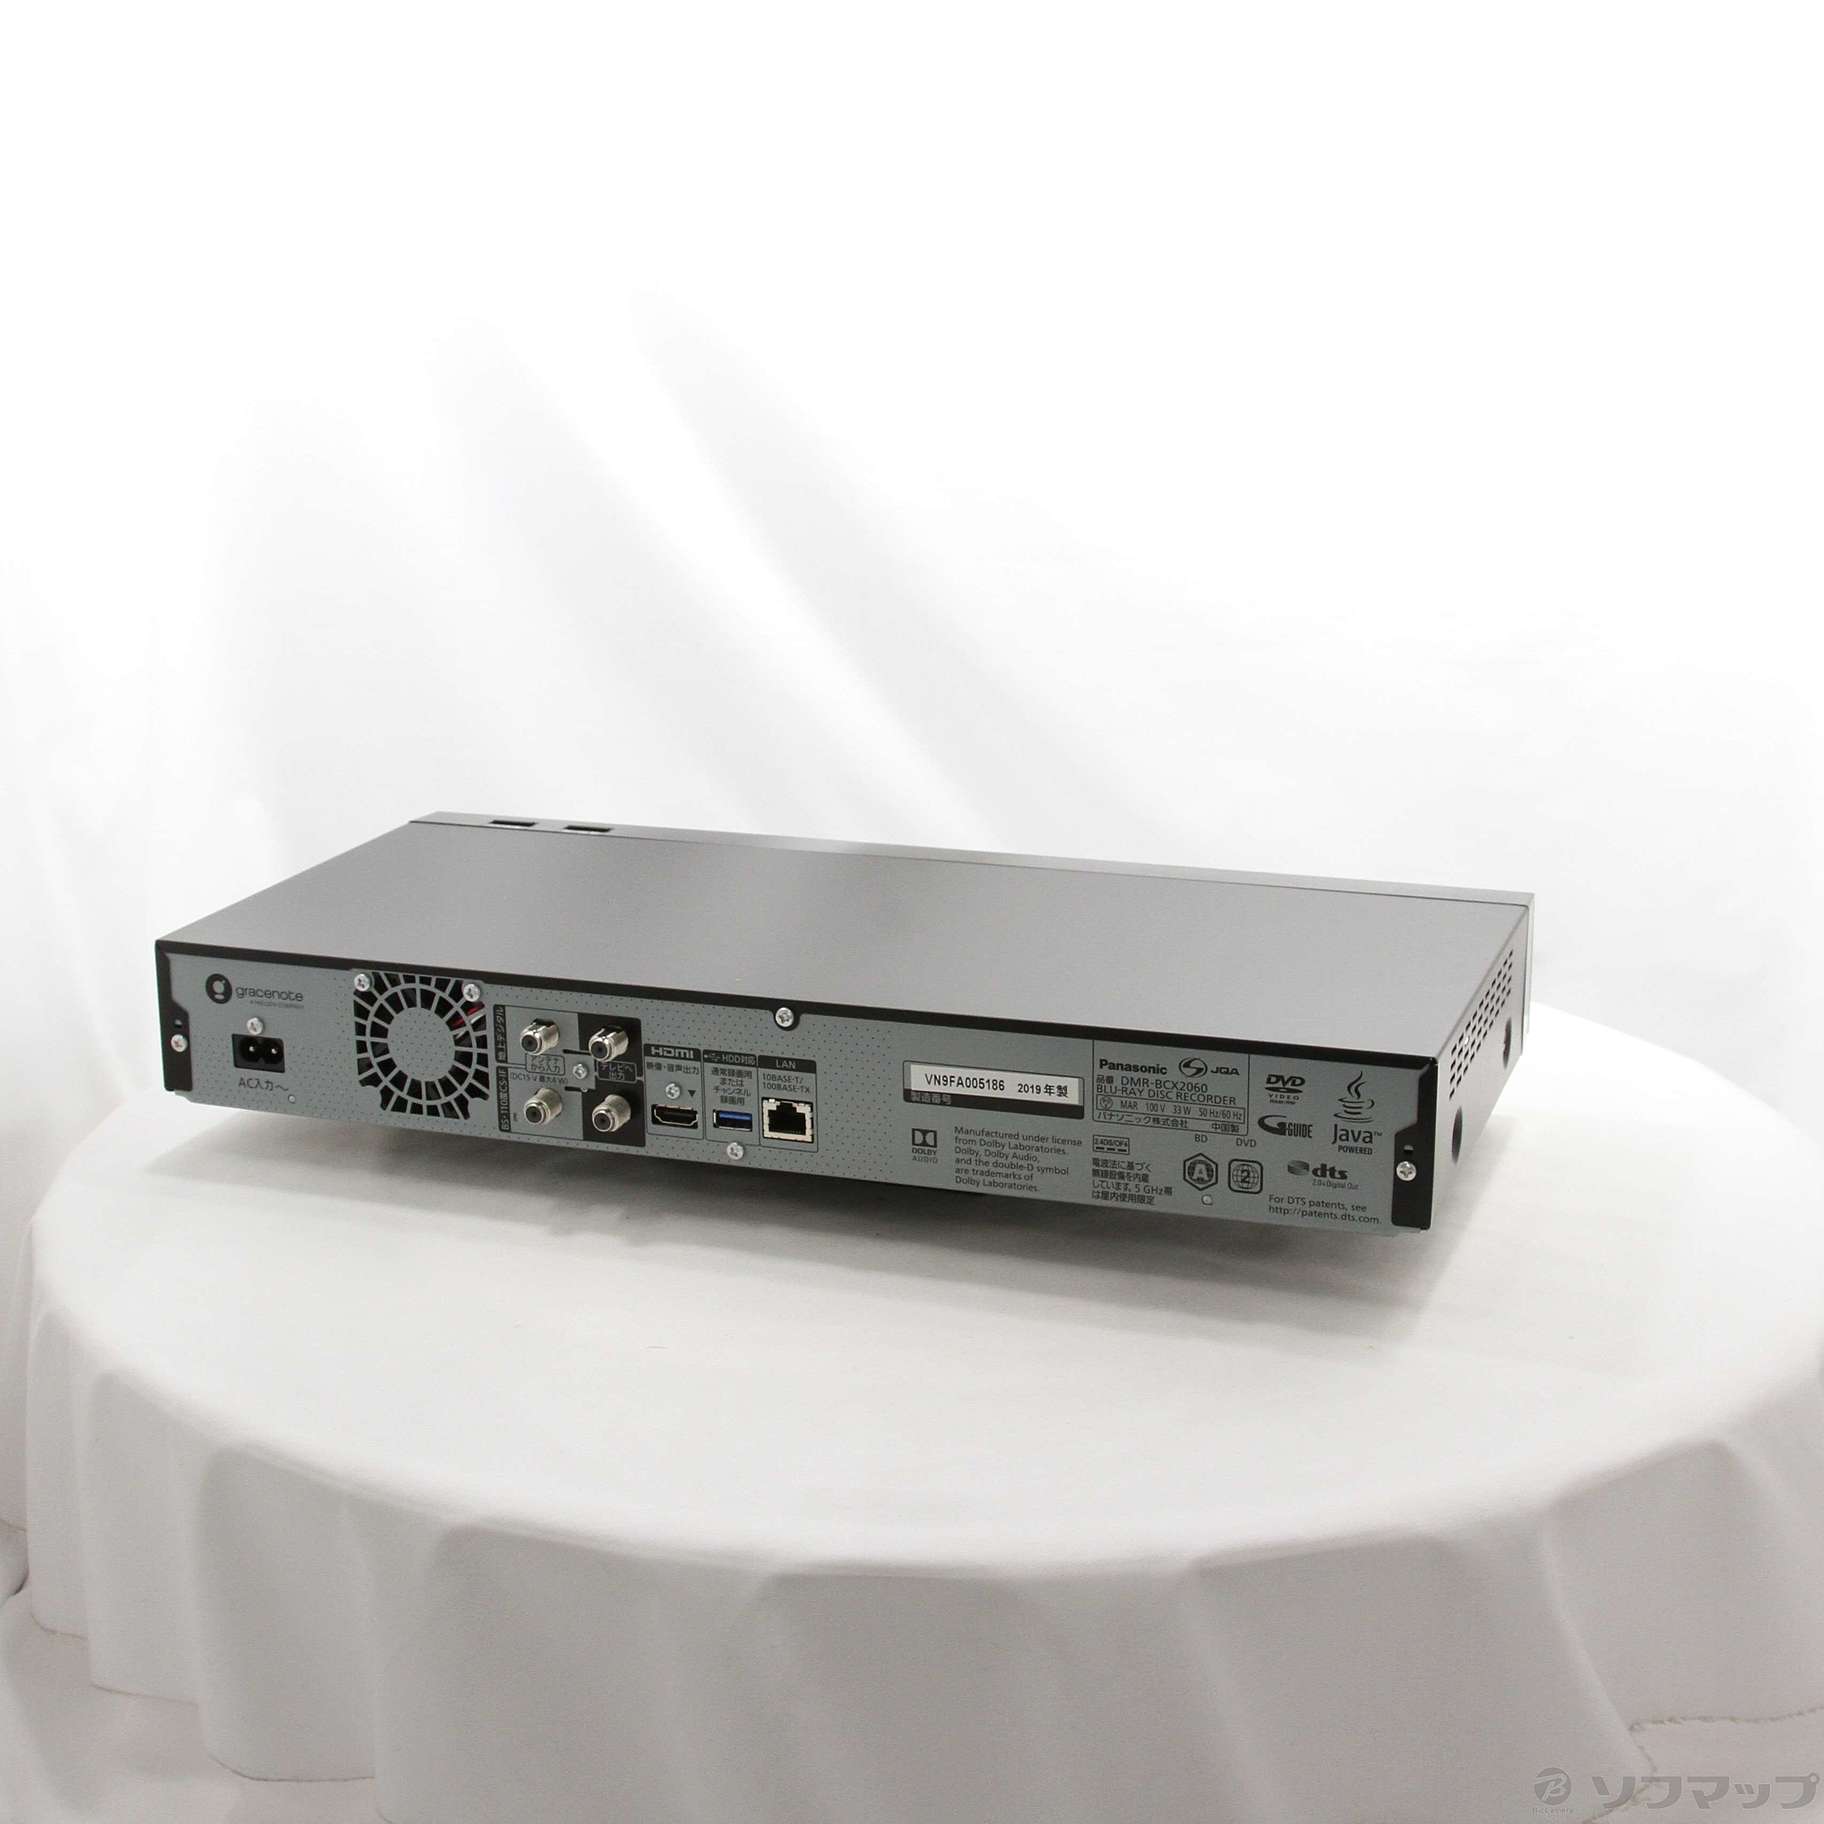 Panasonic DMR-BCX2060 ブルーレイレコーダー DIGA-